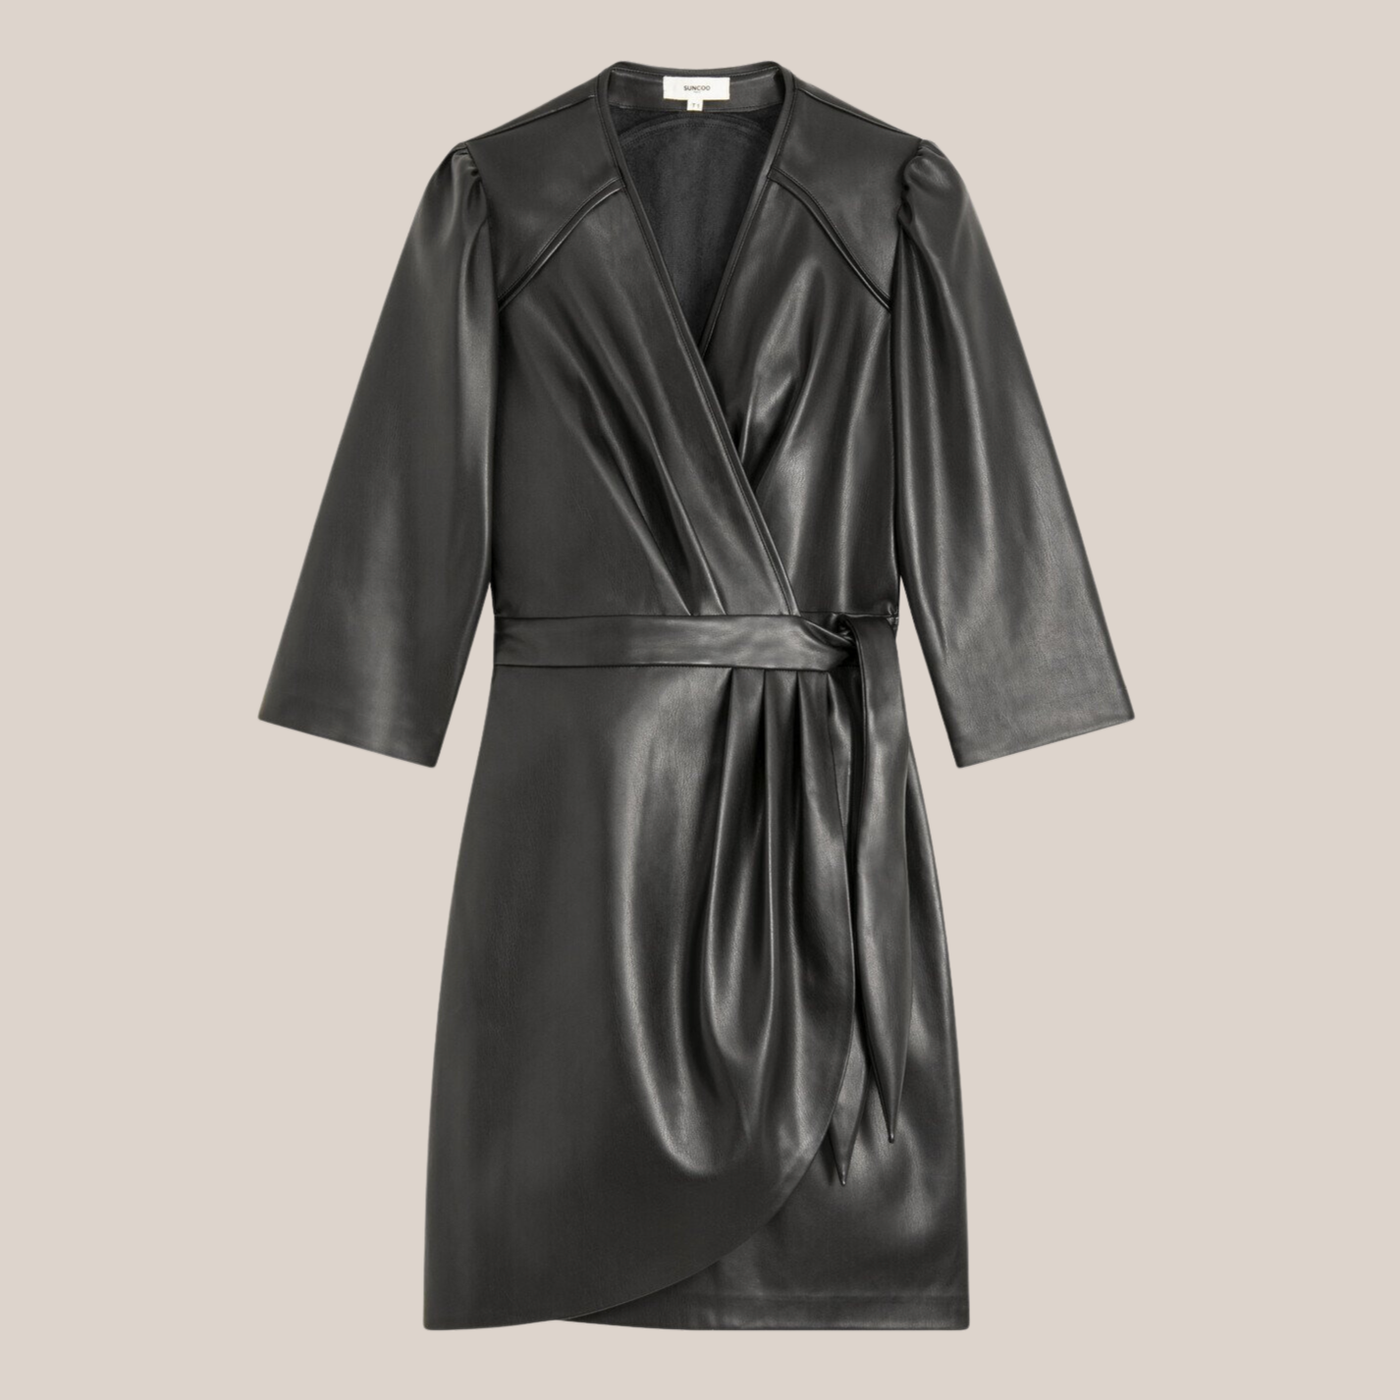 Gotstyle Fashion - Suncoo Dresses Faux Leather 3/4 Sleeve Wrap Dress - Black